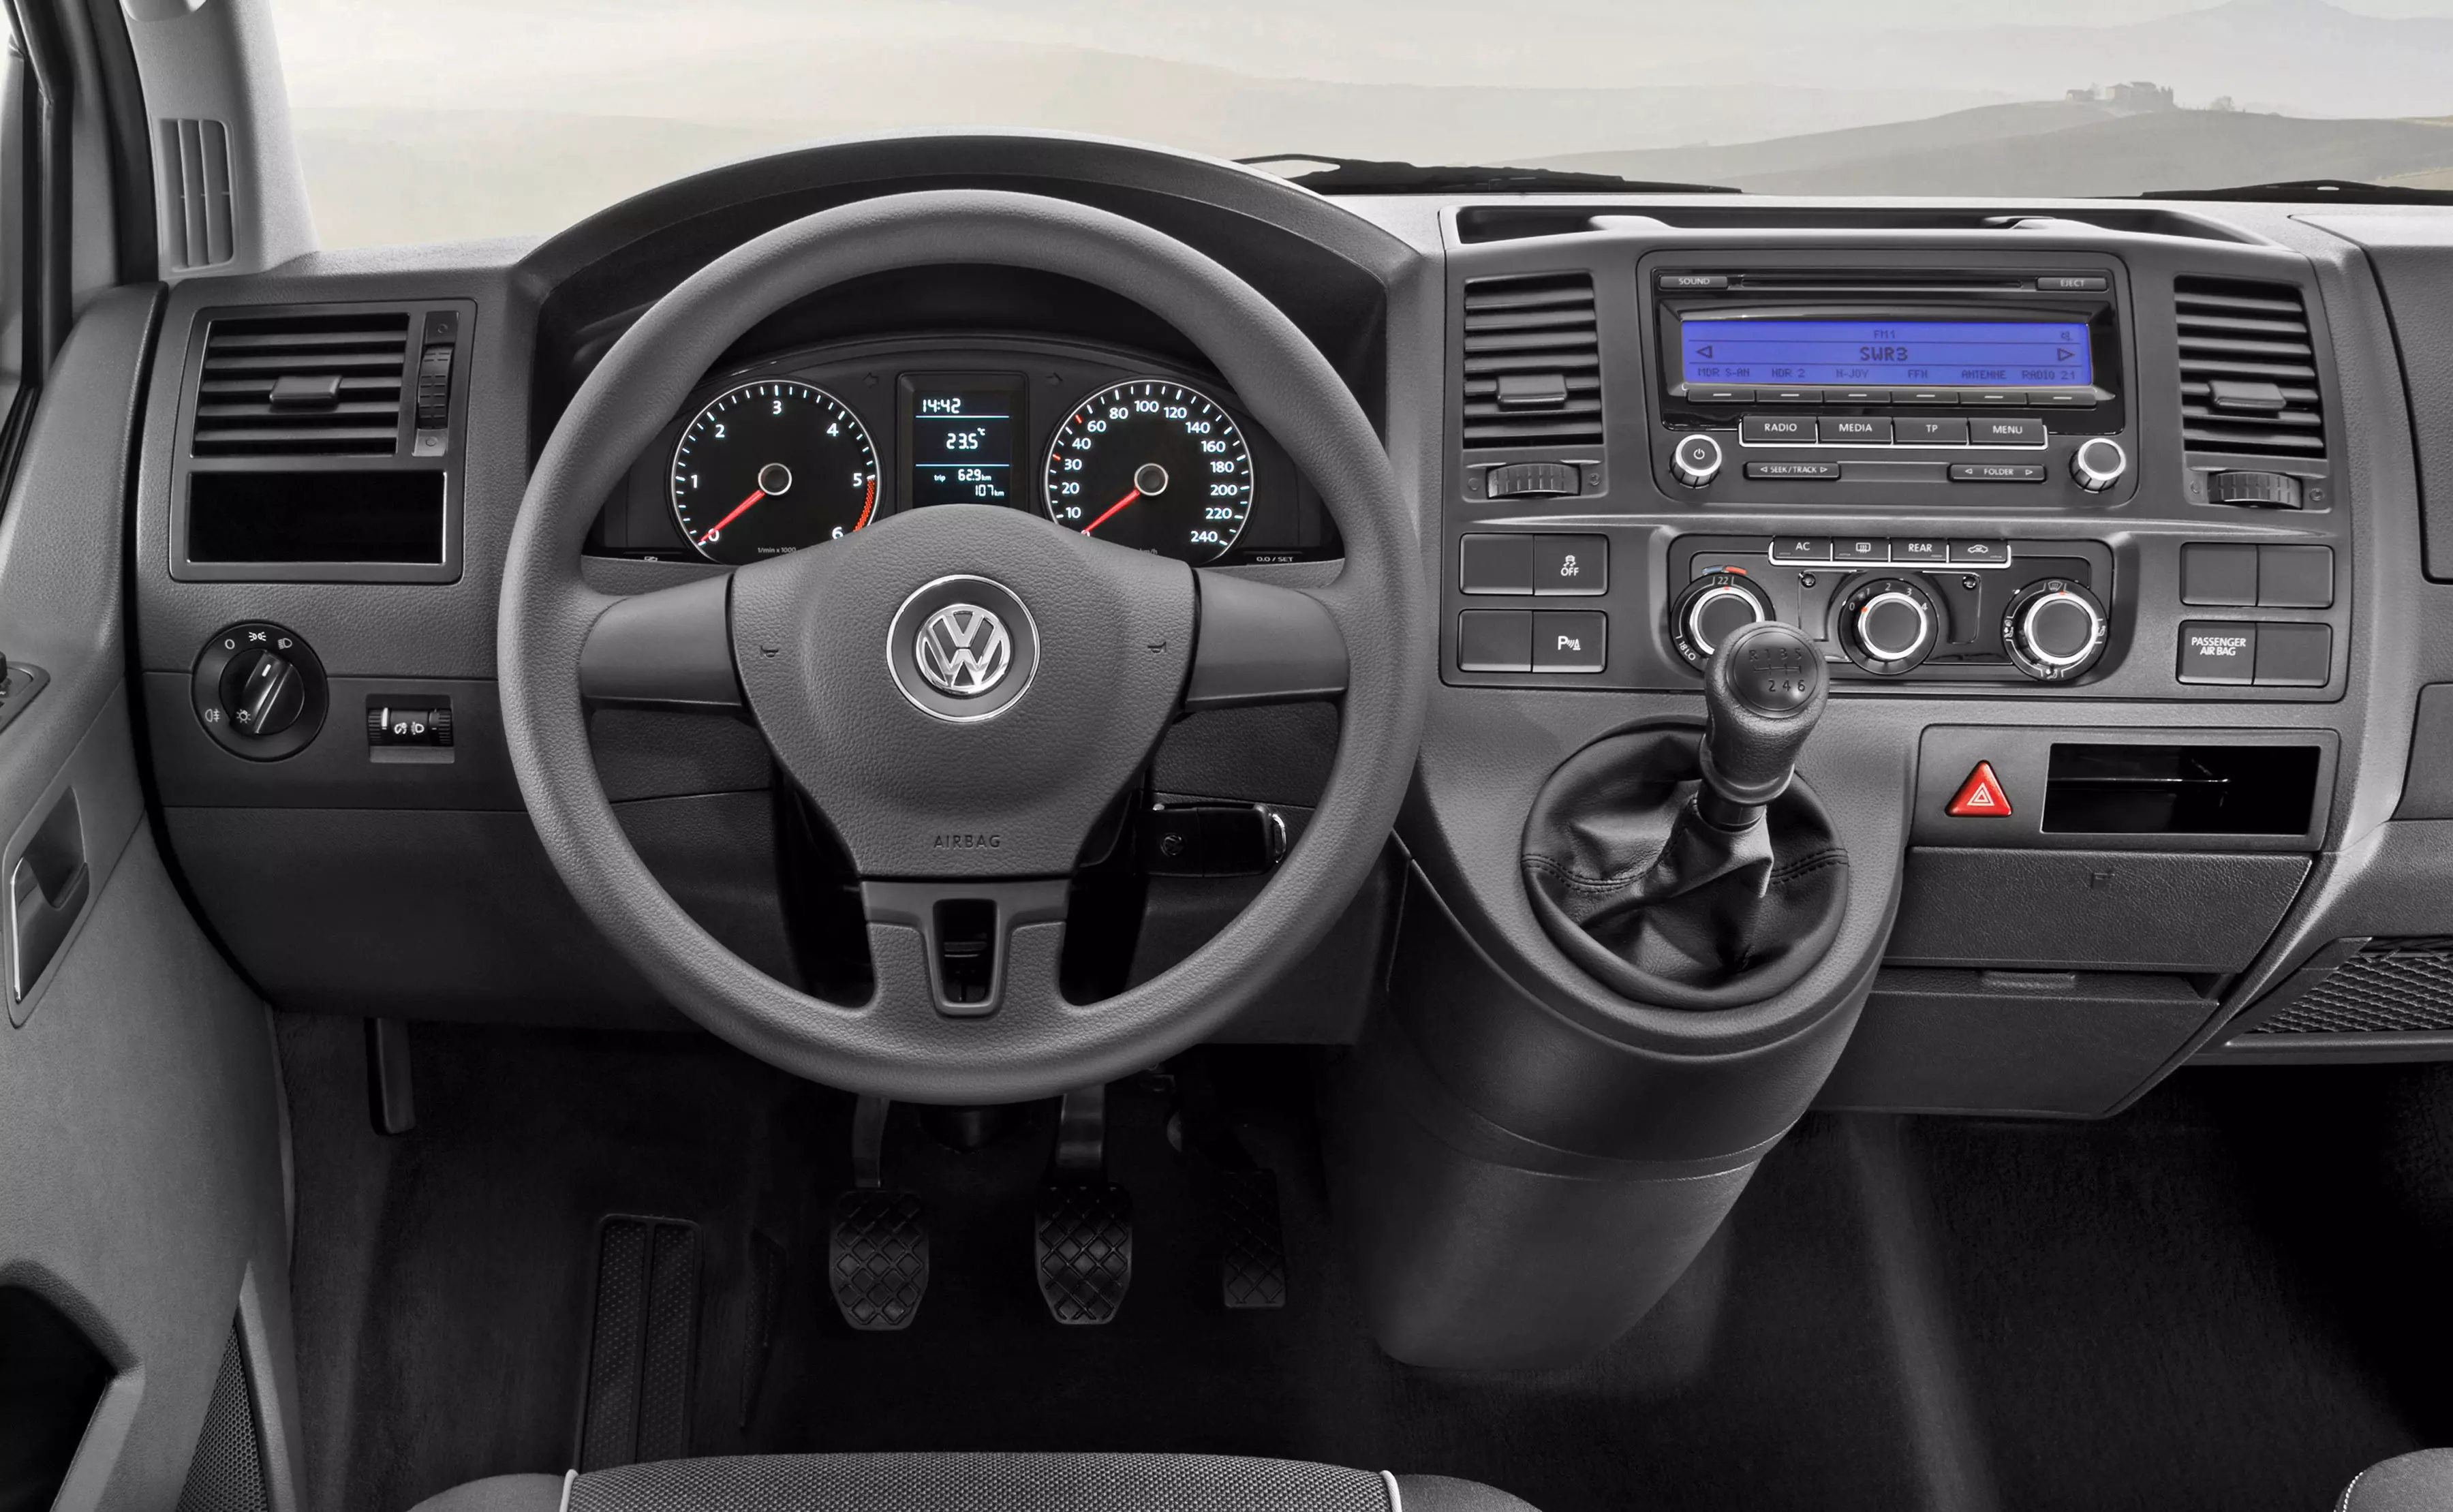 VW Transporter T5 2010 review